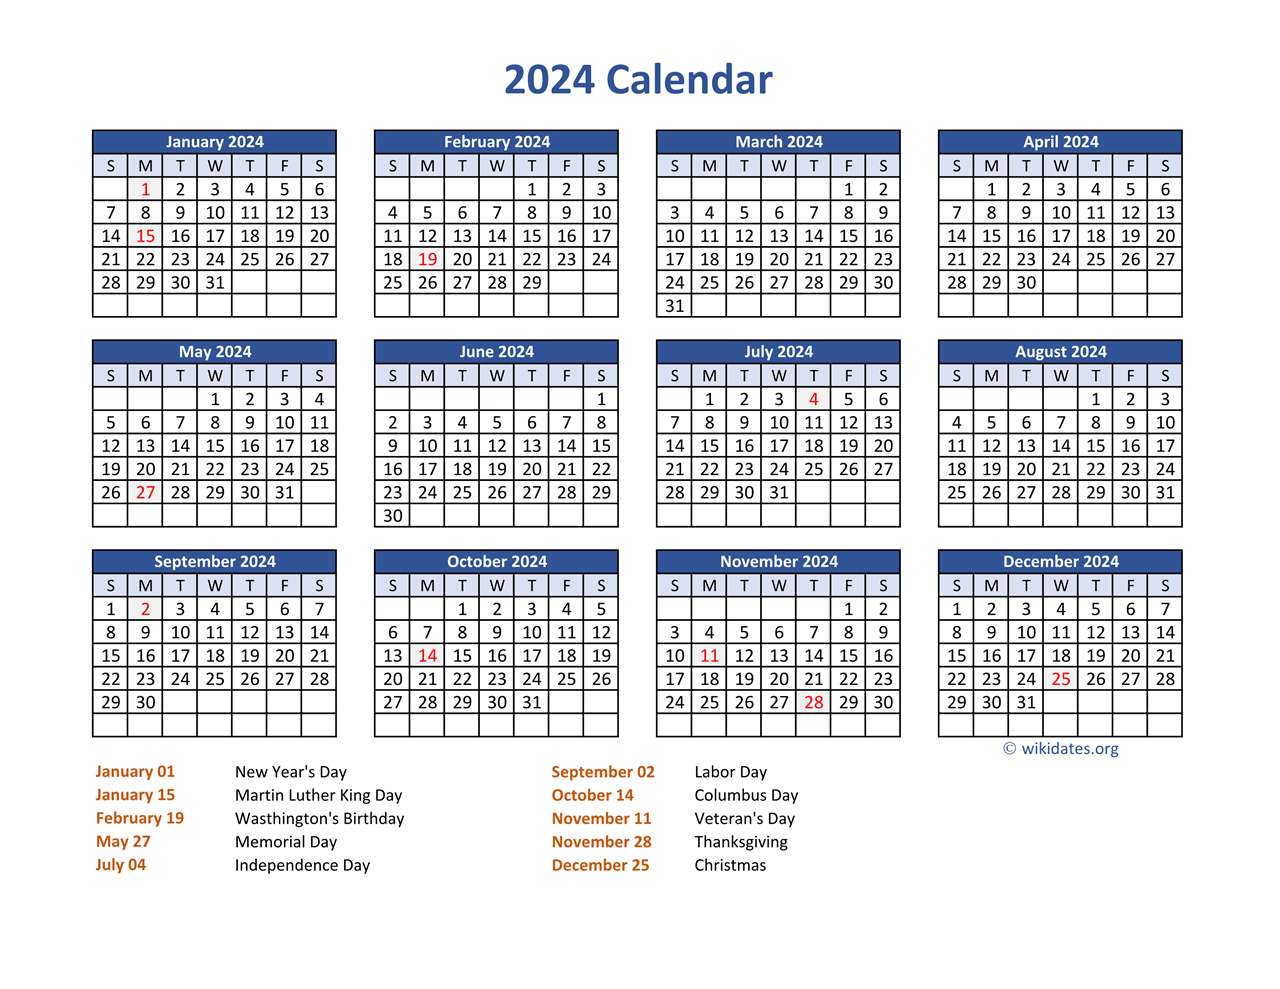 PDF Calendar 2024 with Federal Holidays | WikiDates.org